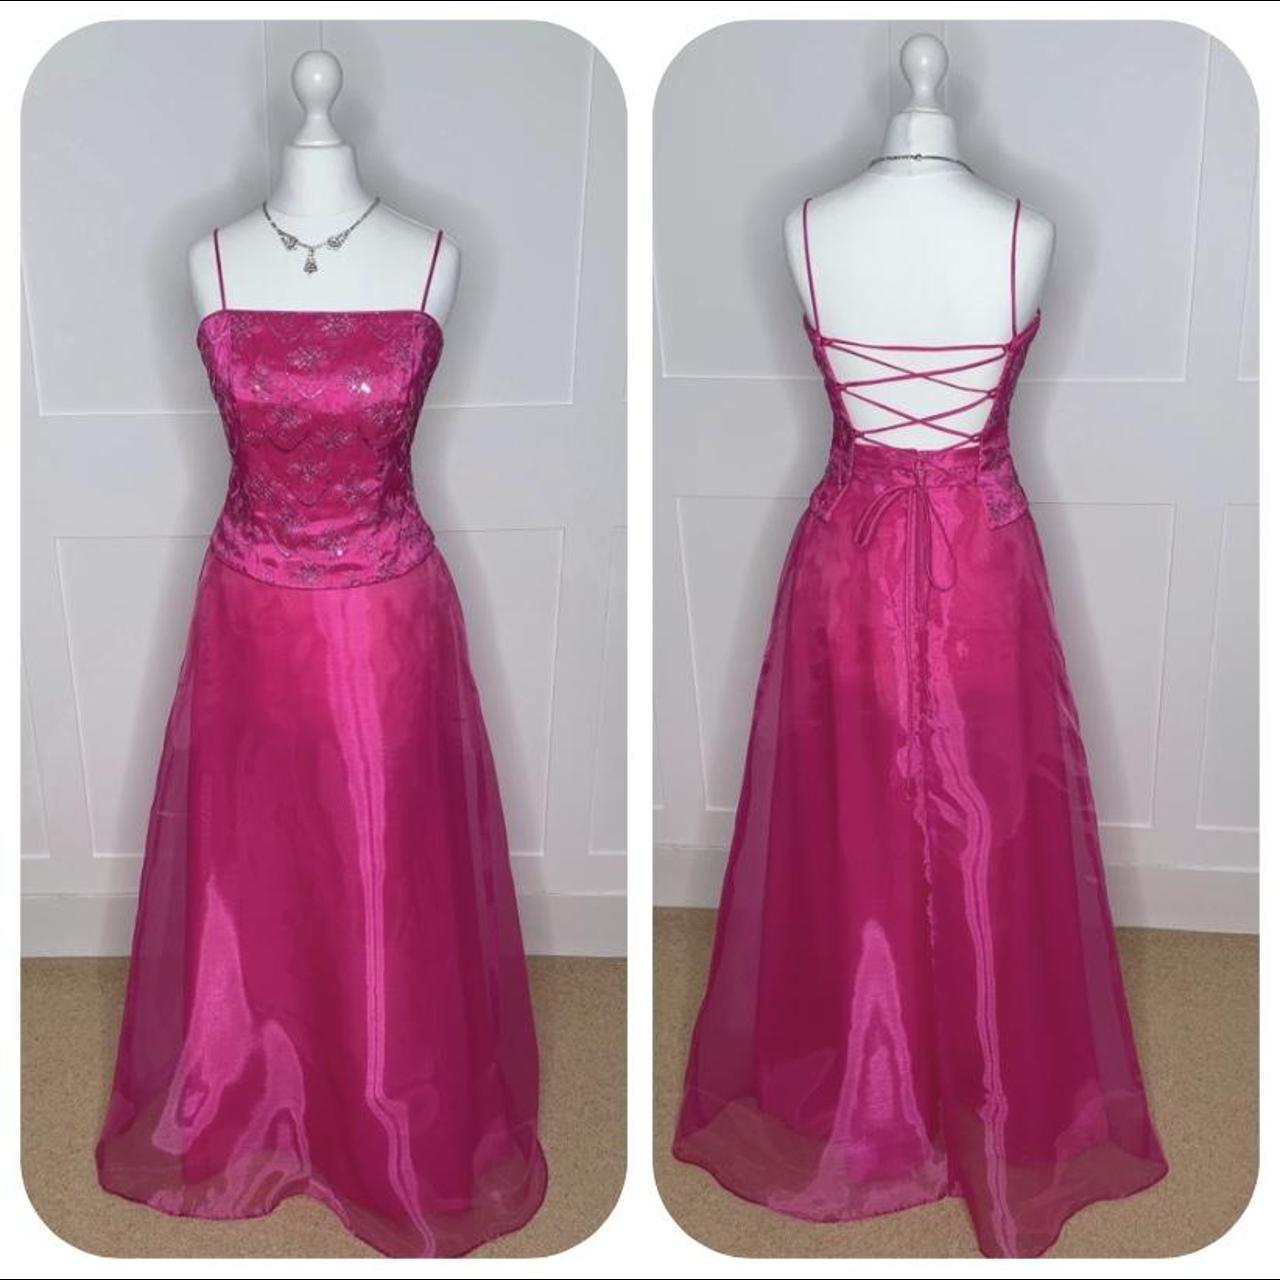 Women's Pink and Silver Dress | Depop